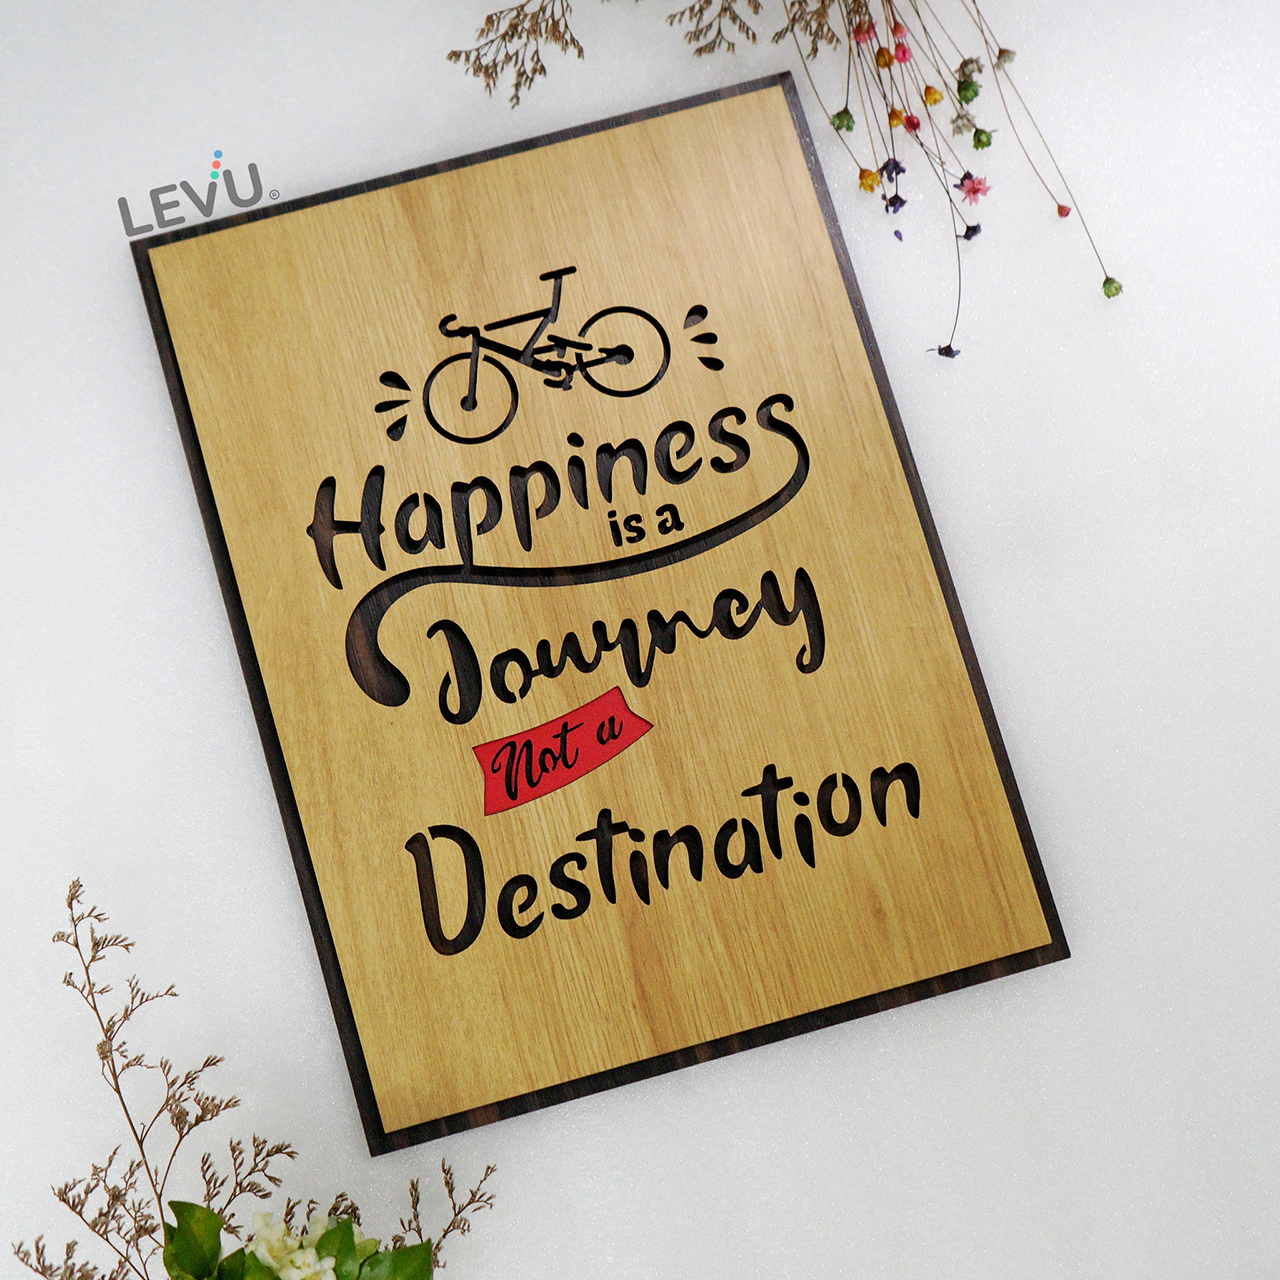 Tranh Slogan tiếng anh LEVU-EN12 “Happiness Is A Journey Not A Destination”